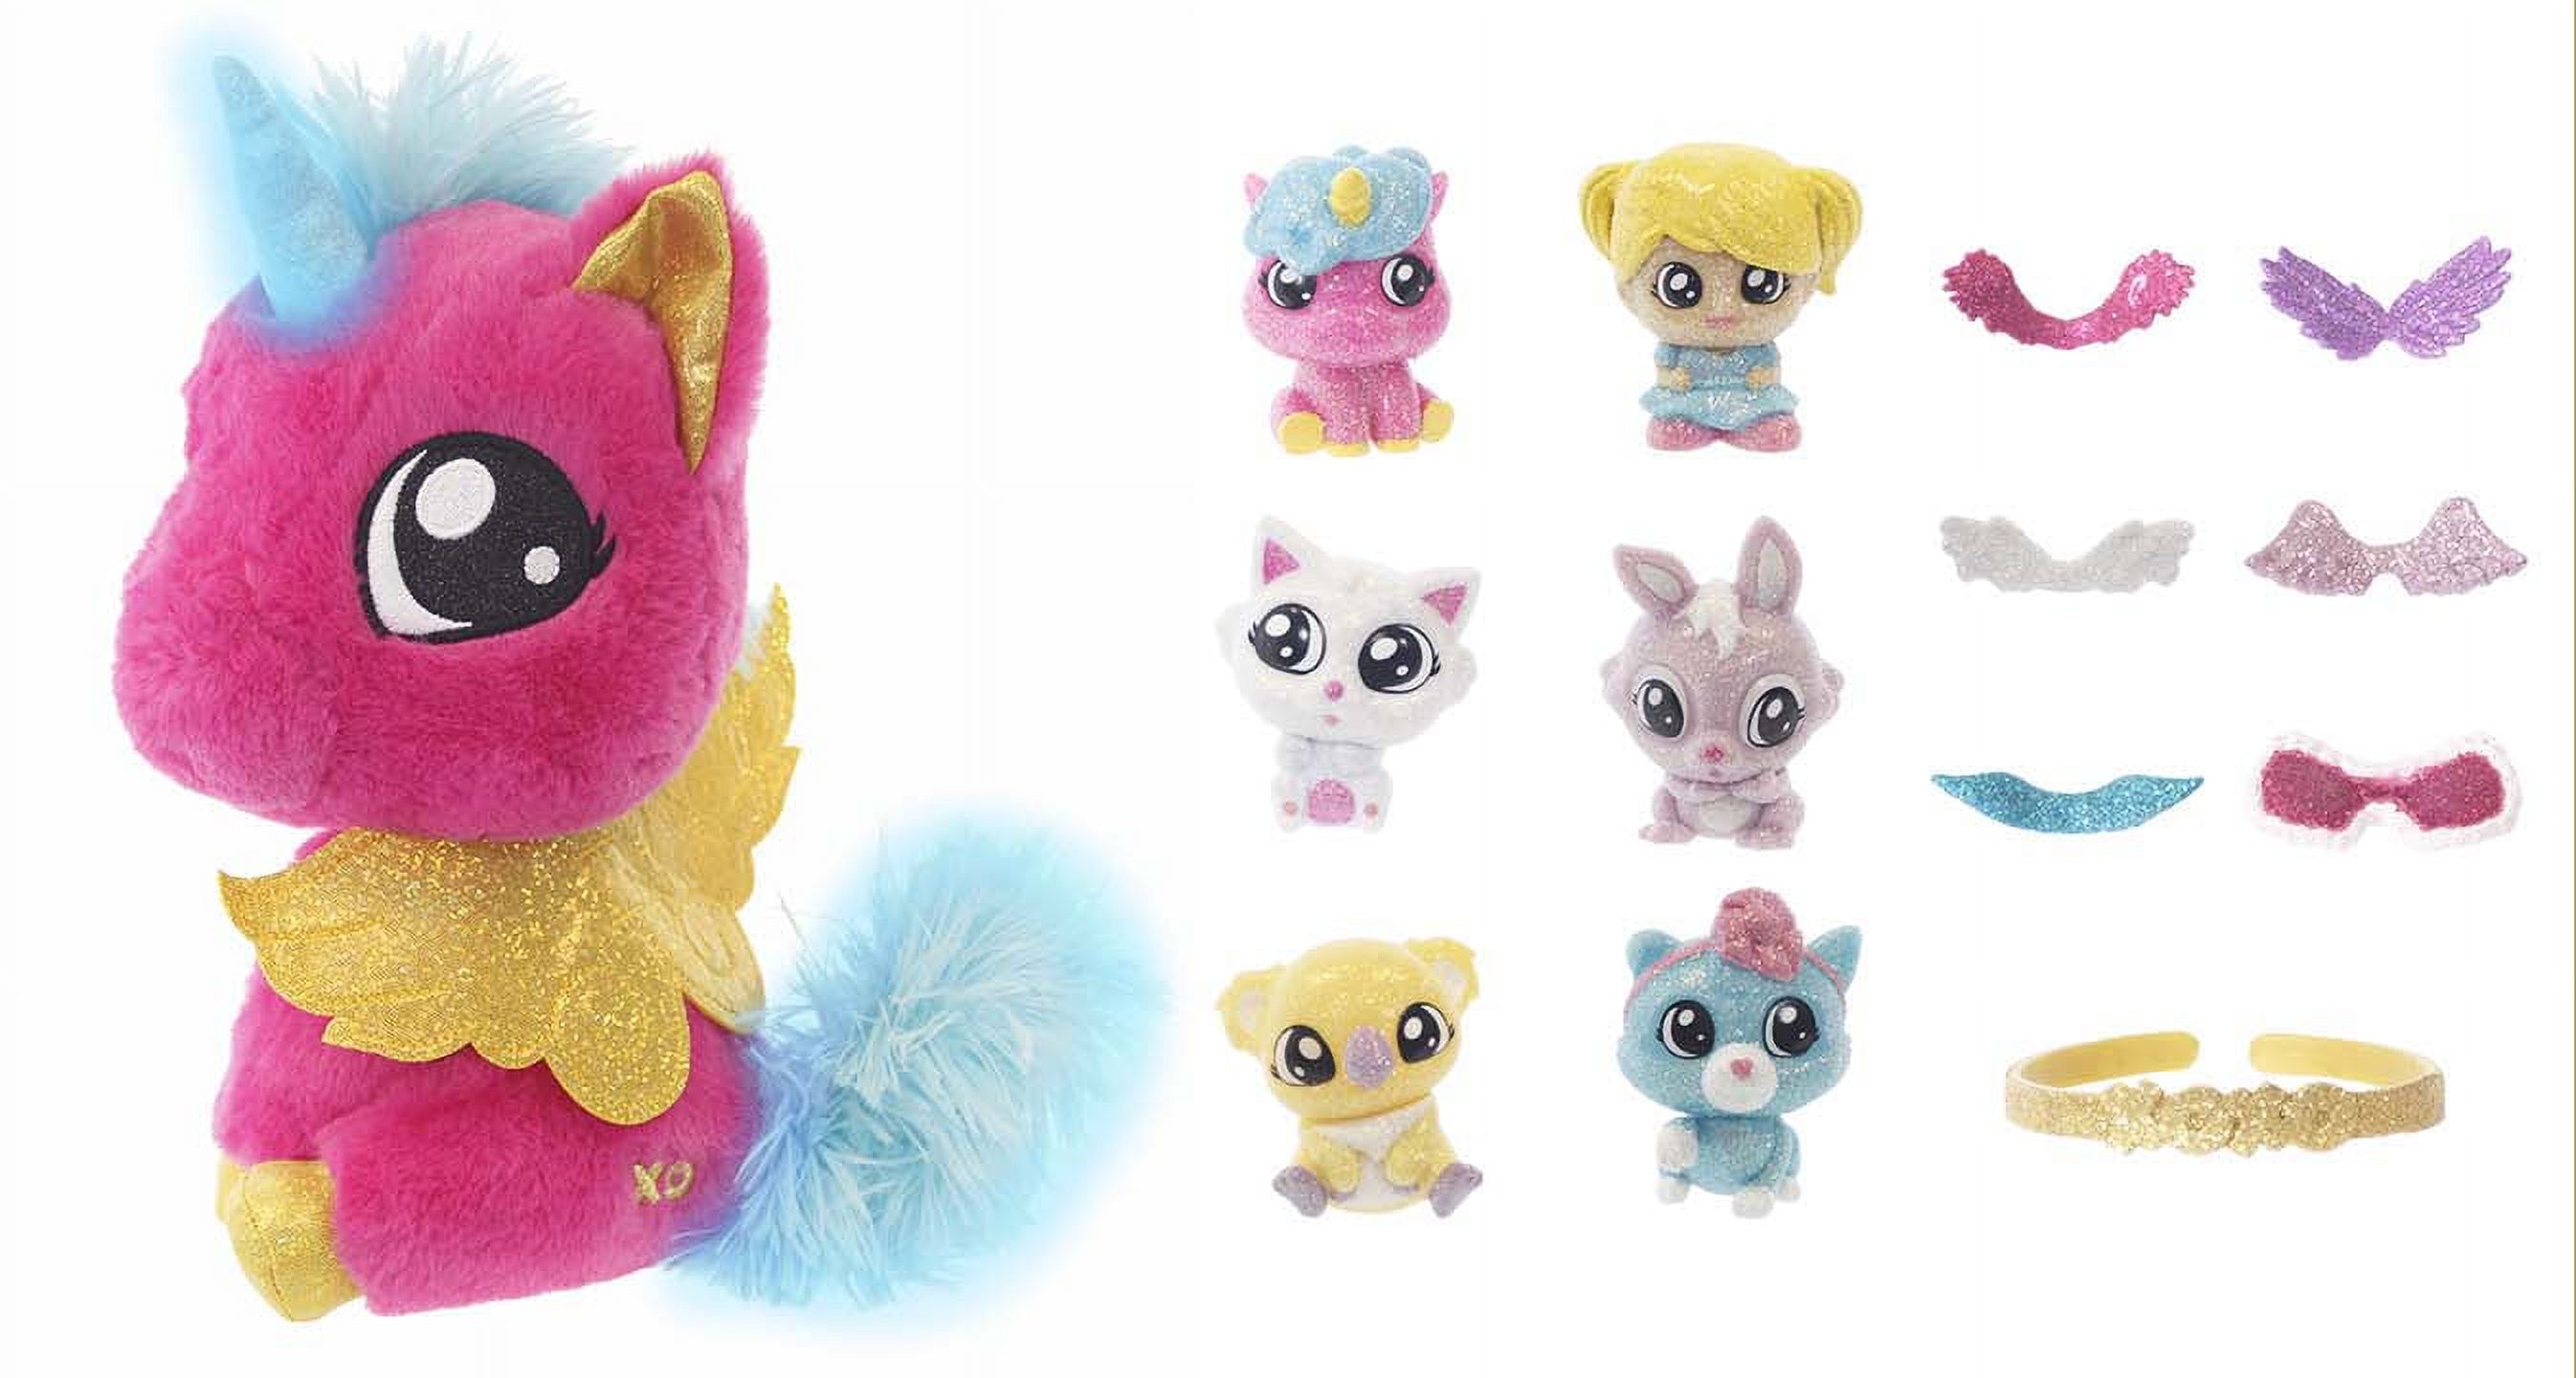 Tic Tac Toy XOXO Light Up Pink Unicorn Hugs & Glitter Friends - image 4 of 4